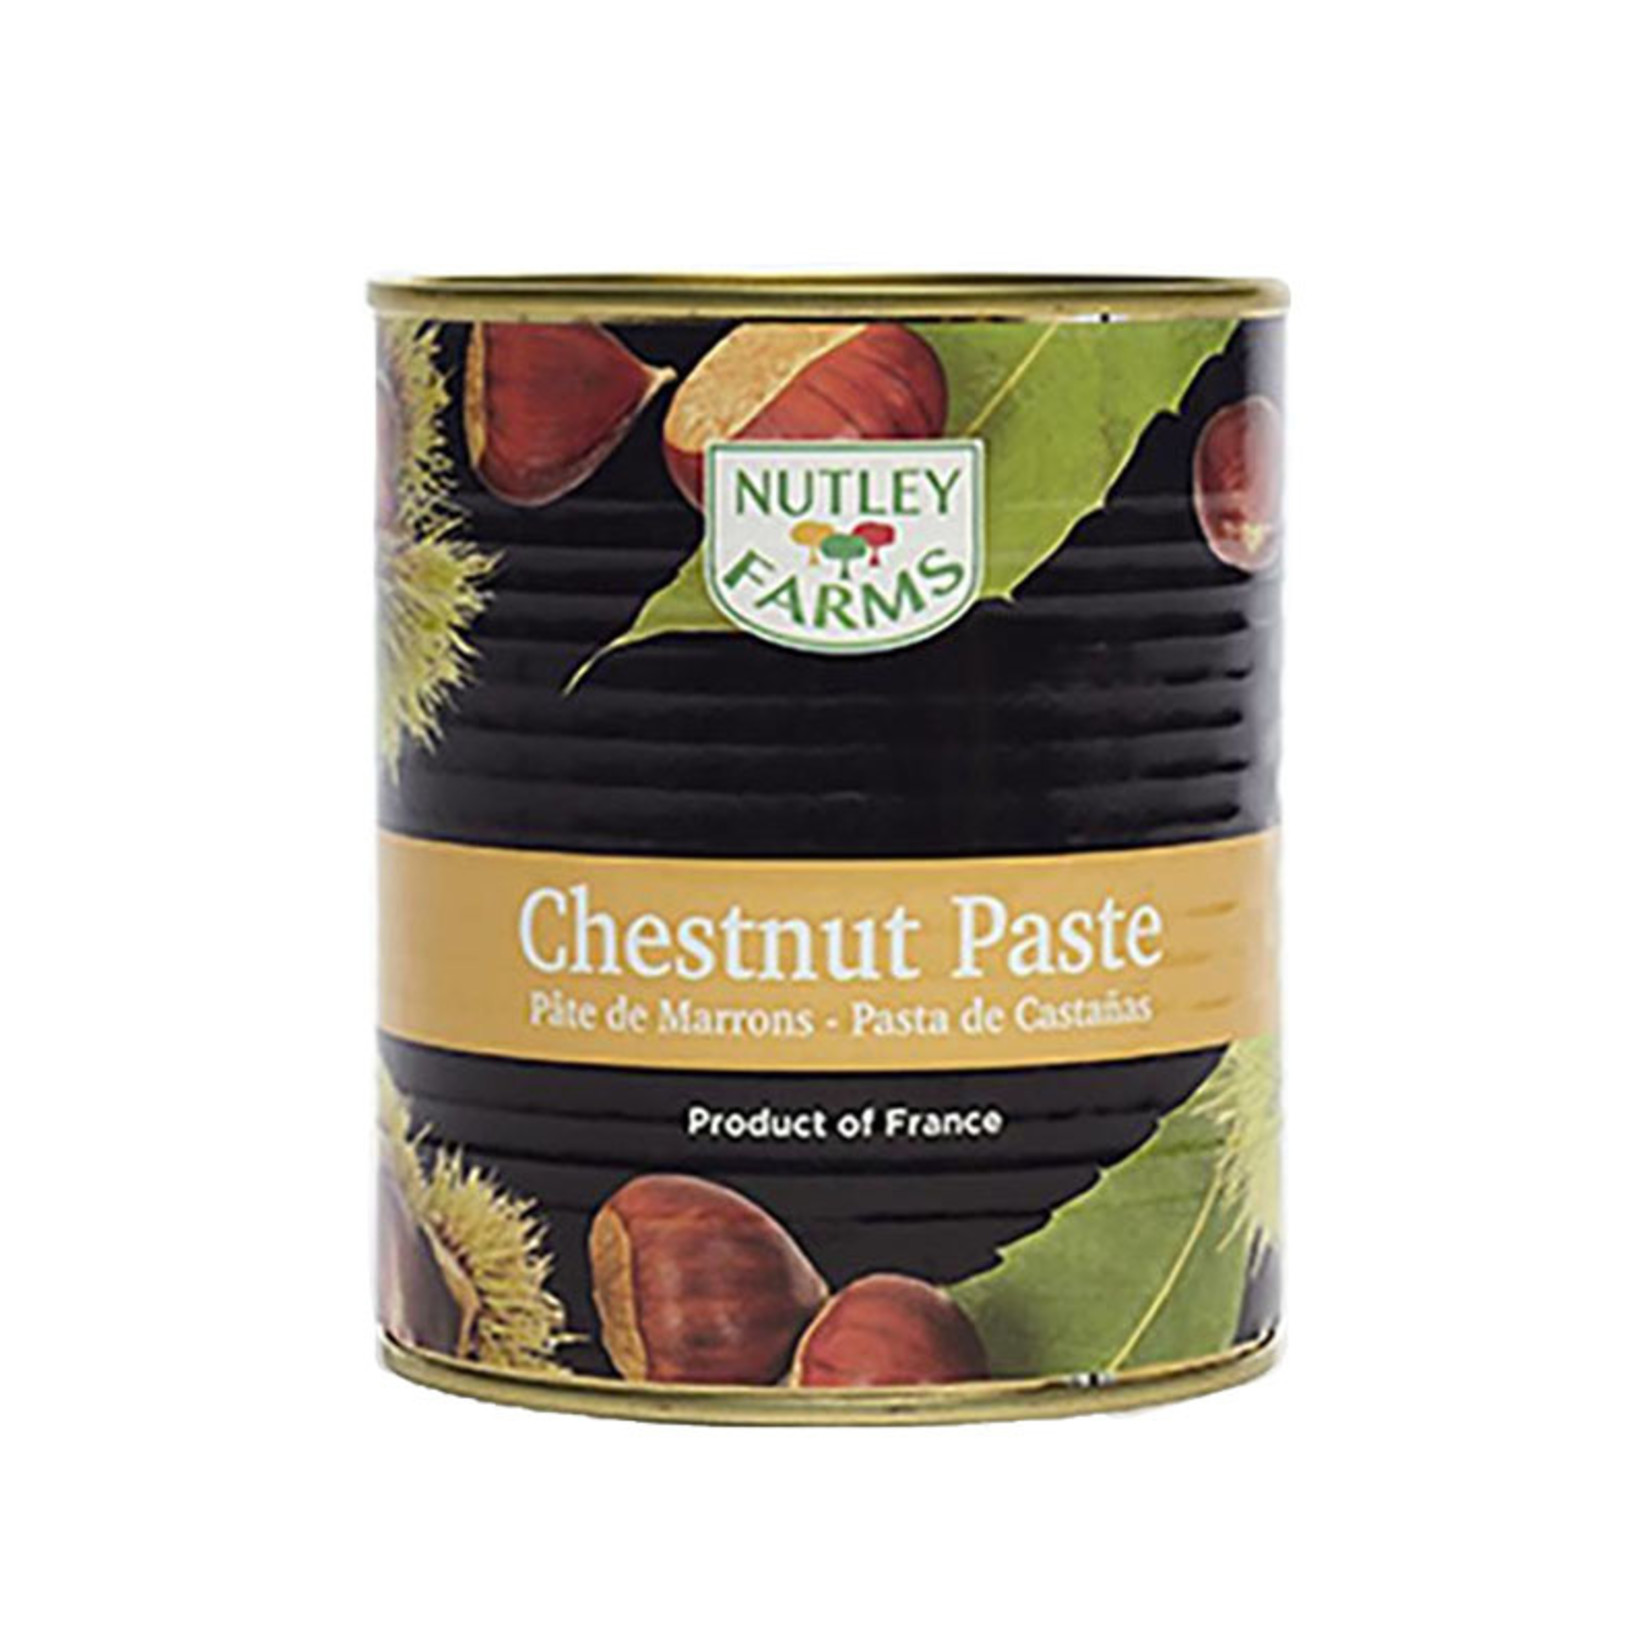 Nutley Farms Nutley Farms - Chestnut paste 60% sweetened - 2.2lb, NU1028